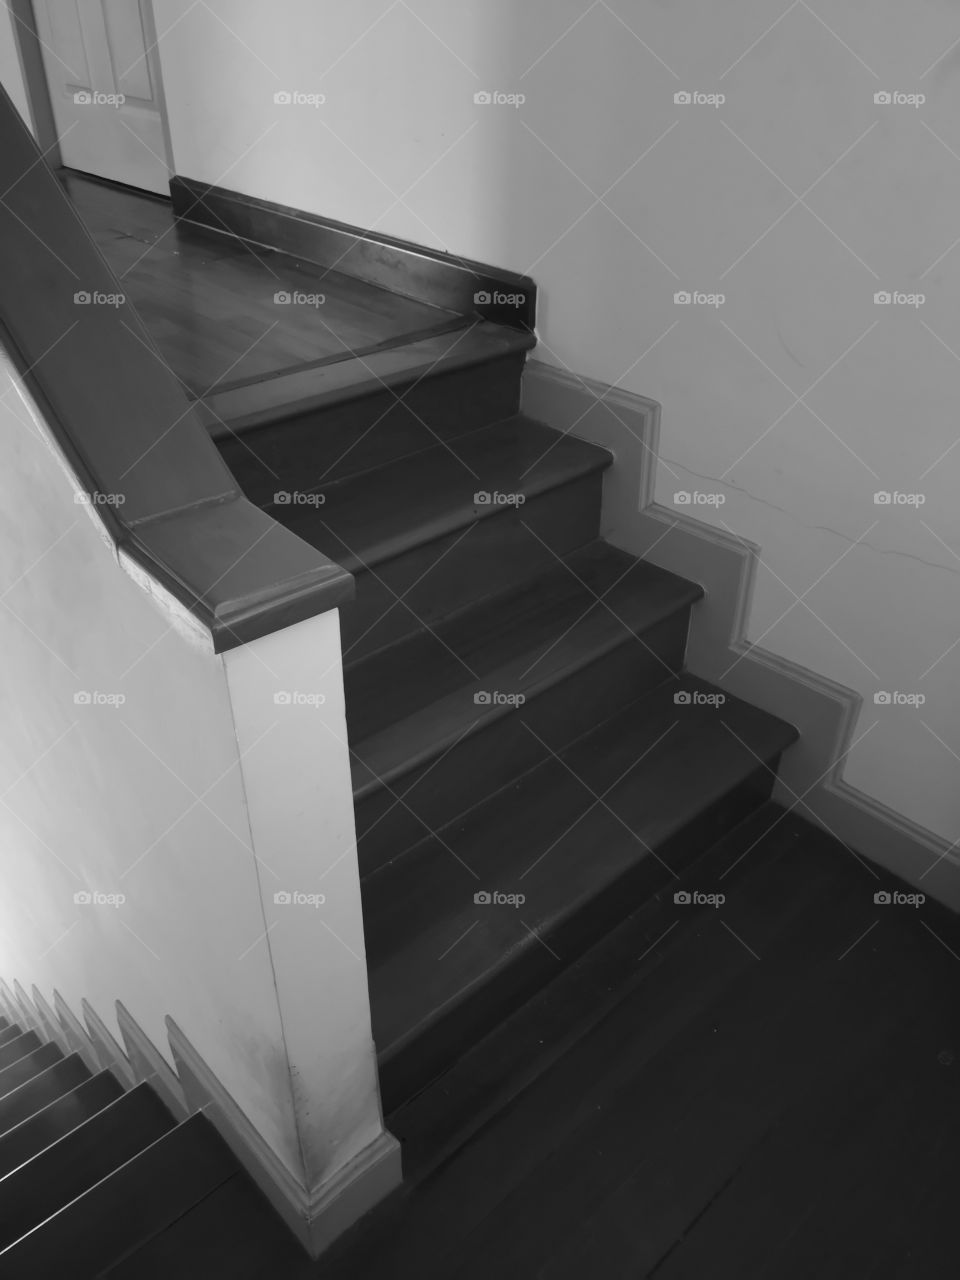 Furthur steps of stair